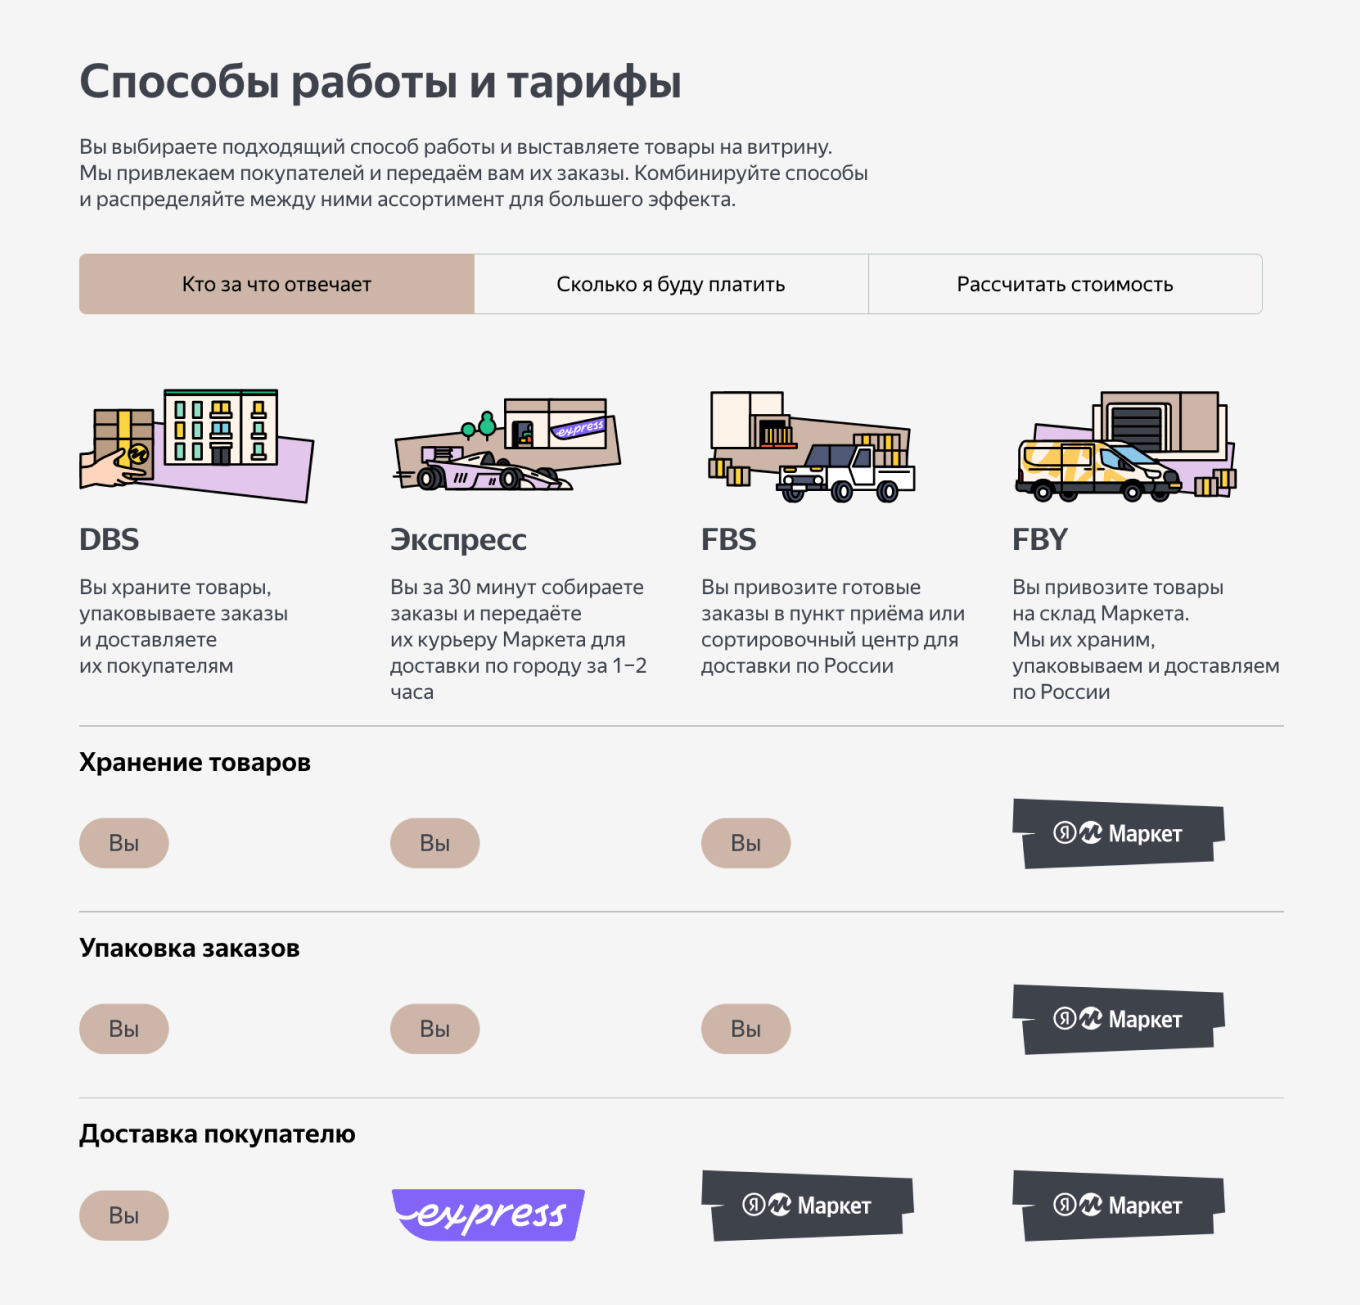 Модели сотрудничества Яндекс.Маркет